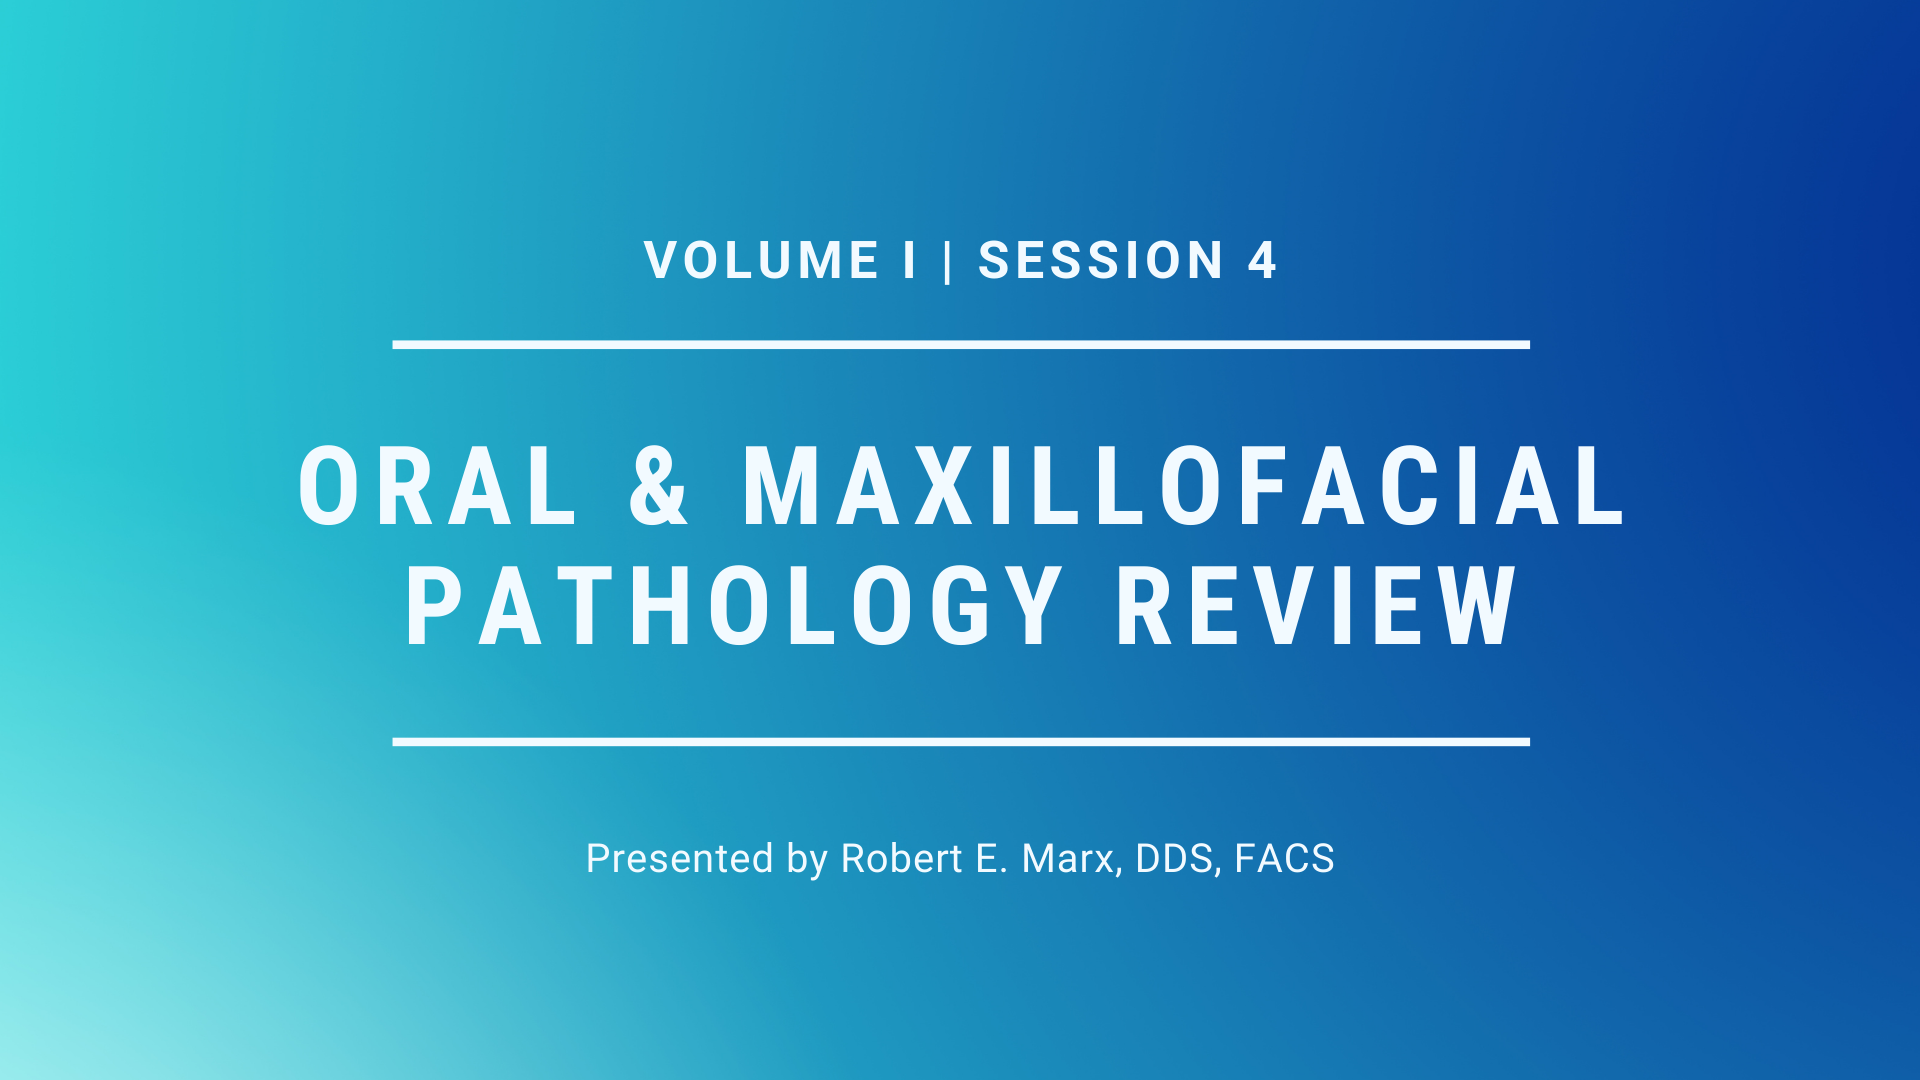 Oral & Maxillofacial Pathology Review – Volume I (OMFS) - Session 4